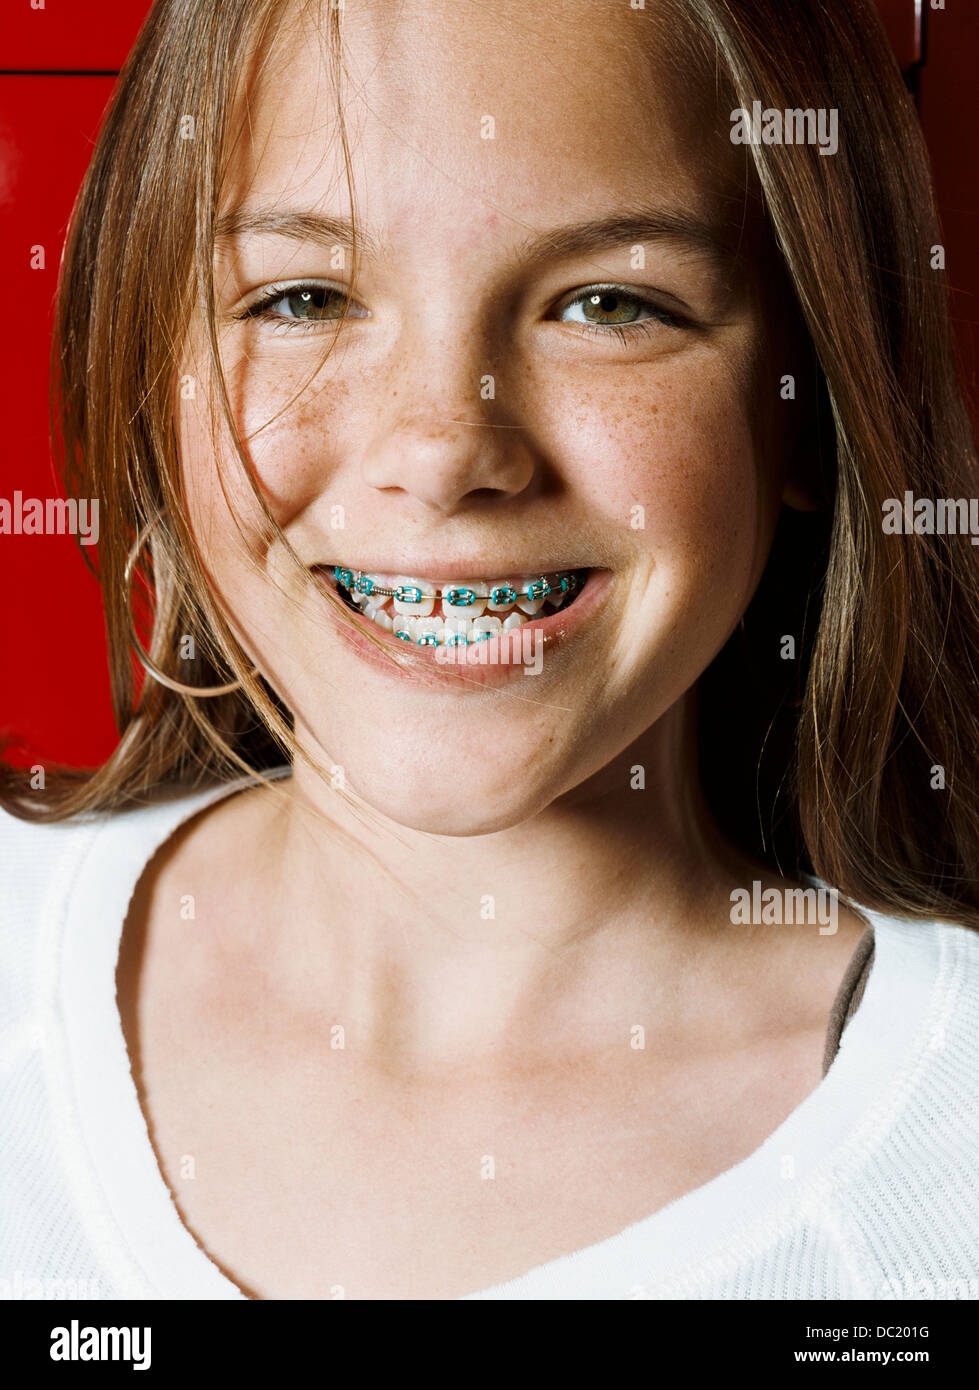 Girl in school locker room, portrait Stock Photo